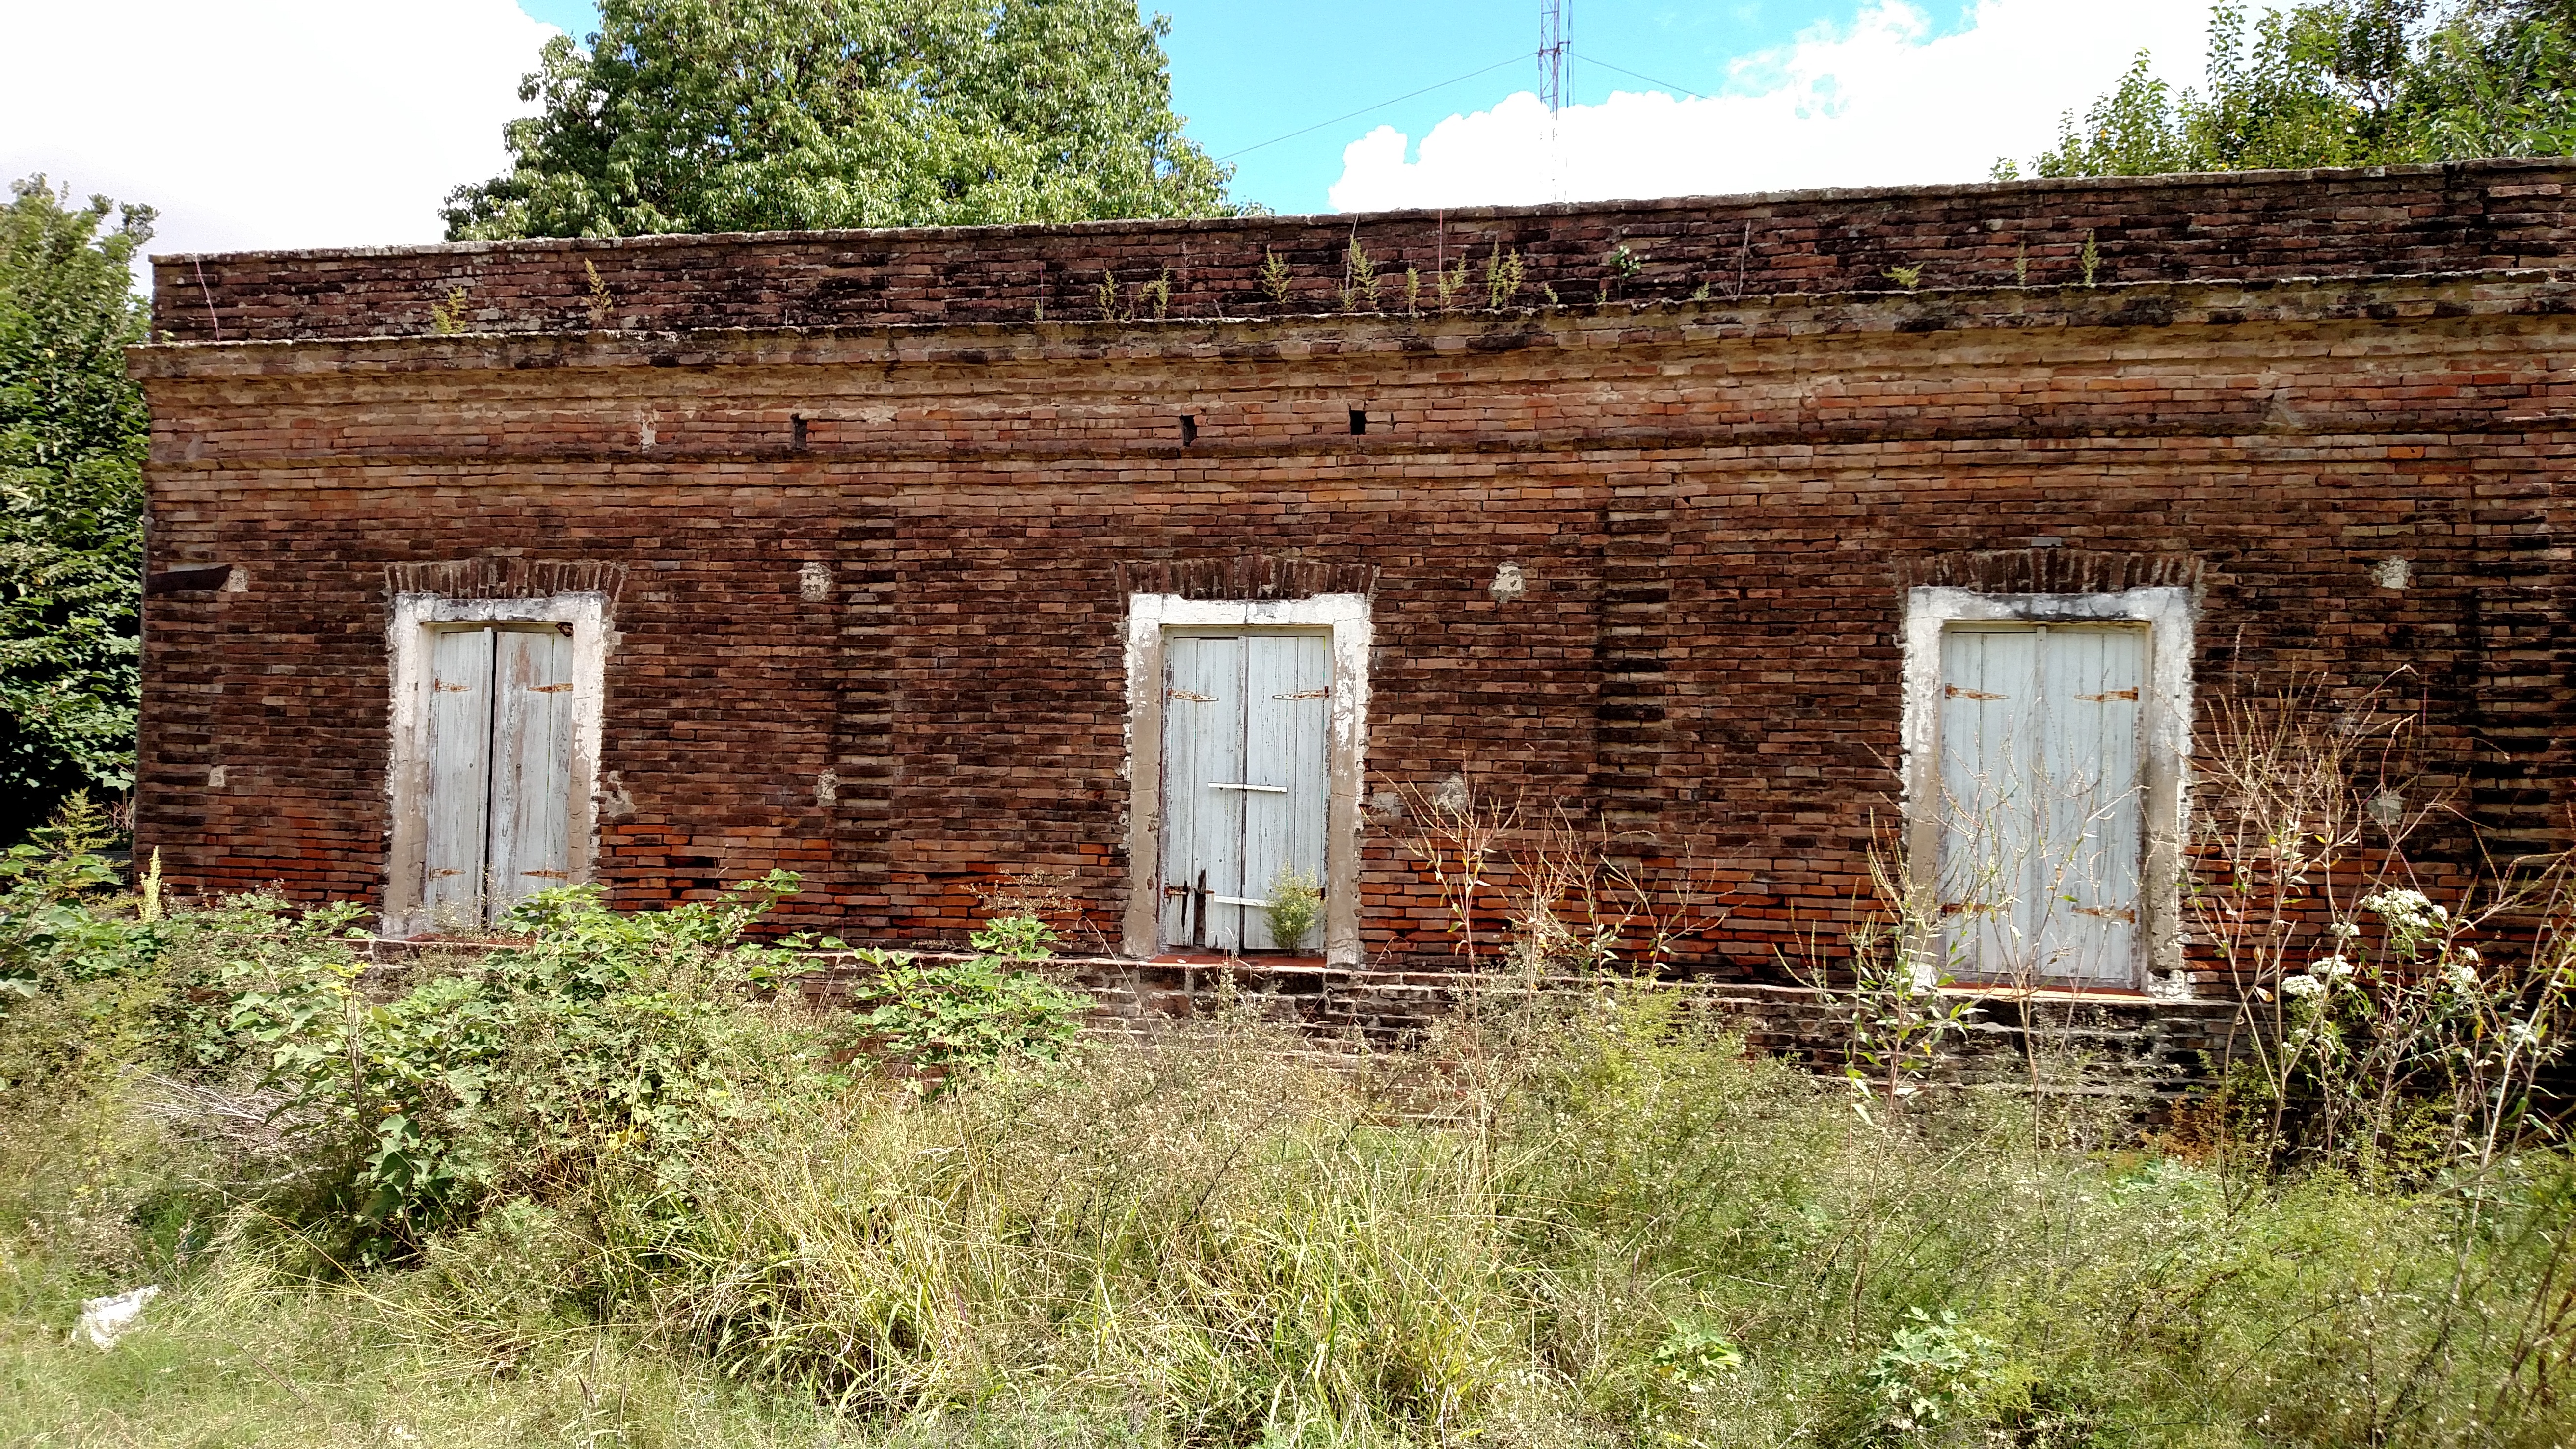 Abandoned German home in Brasilera. Source: Valerie Miller.